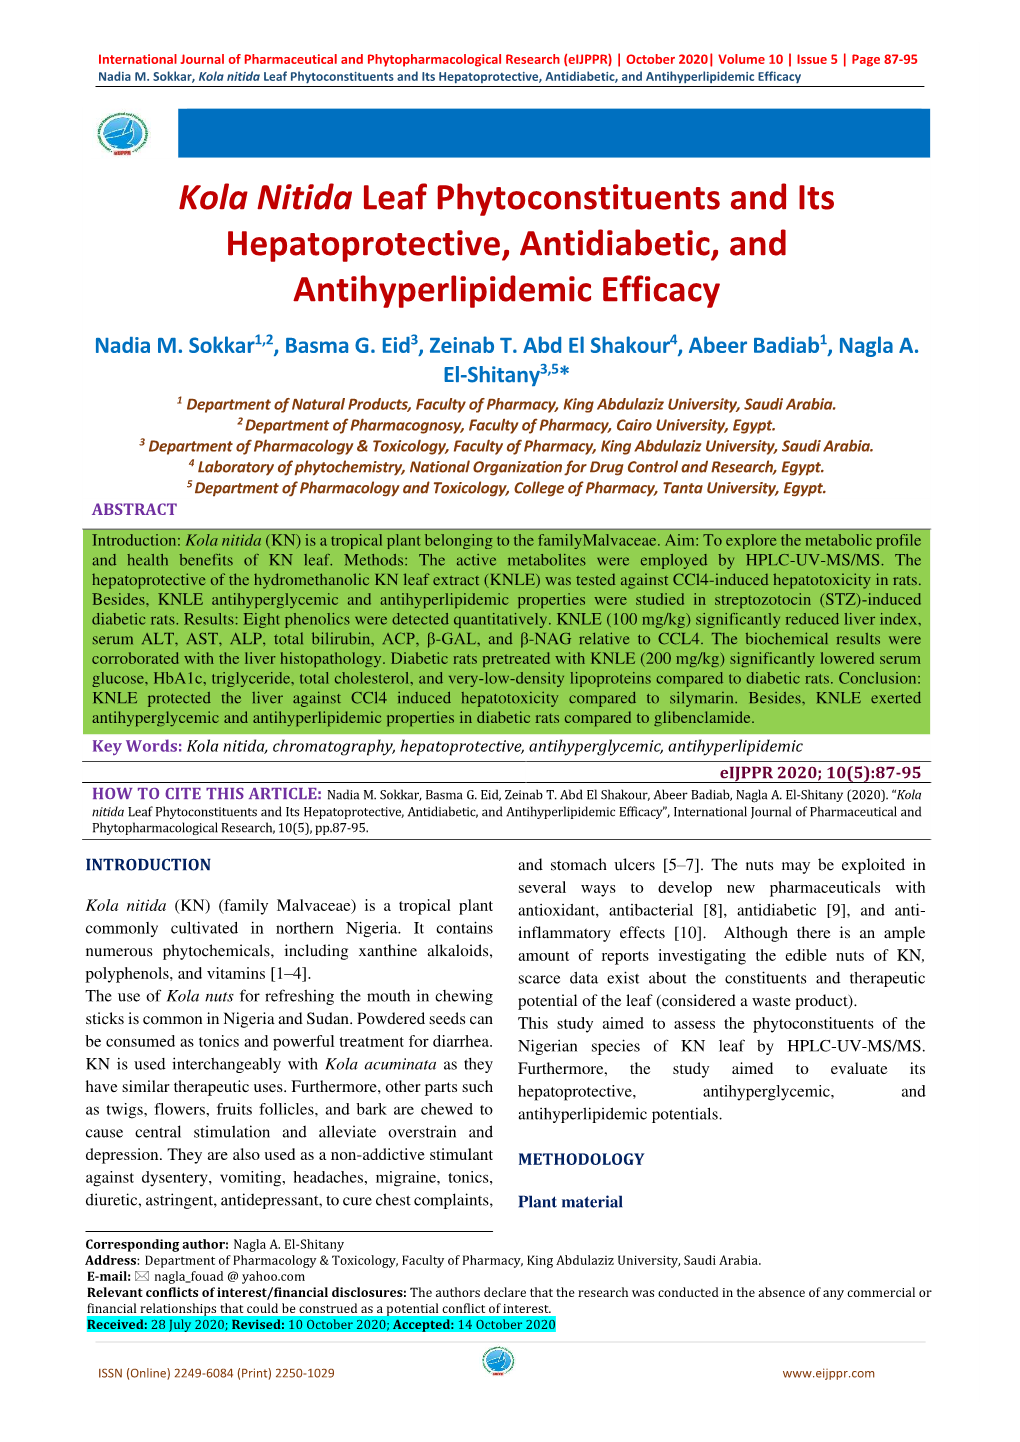 Kola Nitida Leaf Phytoconstituents and Its Hepatoprotective, Antidiabetic, and Antihyperlipidemic Efficacy